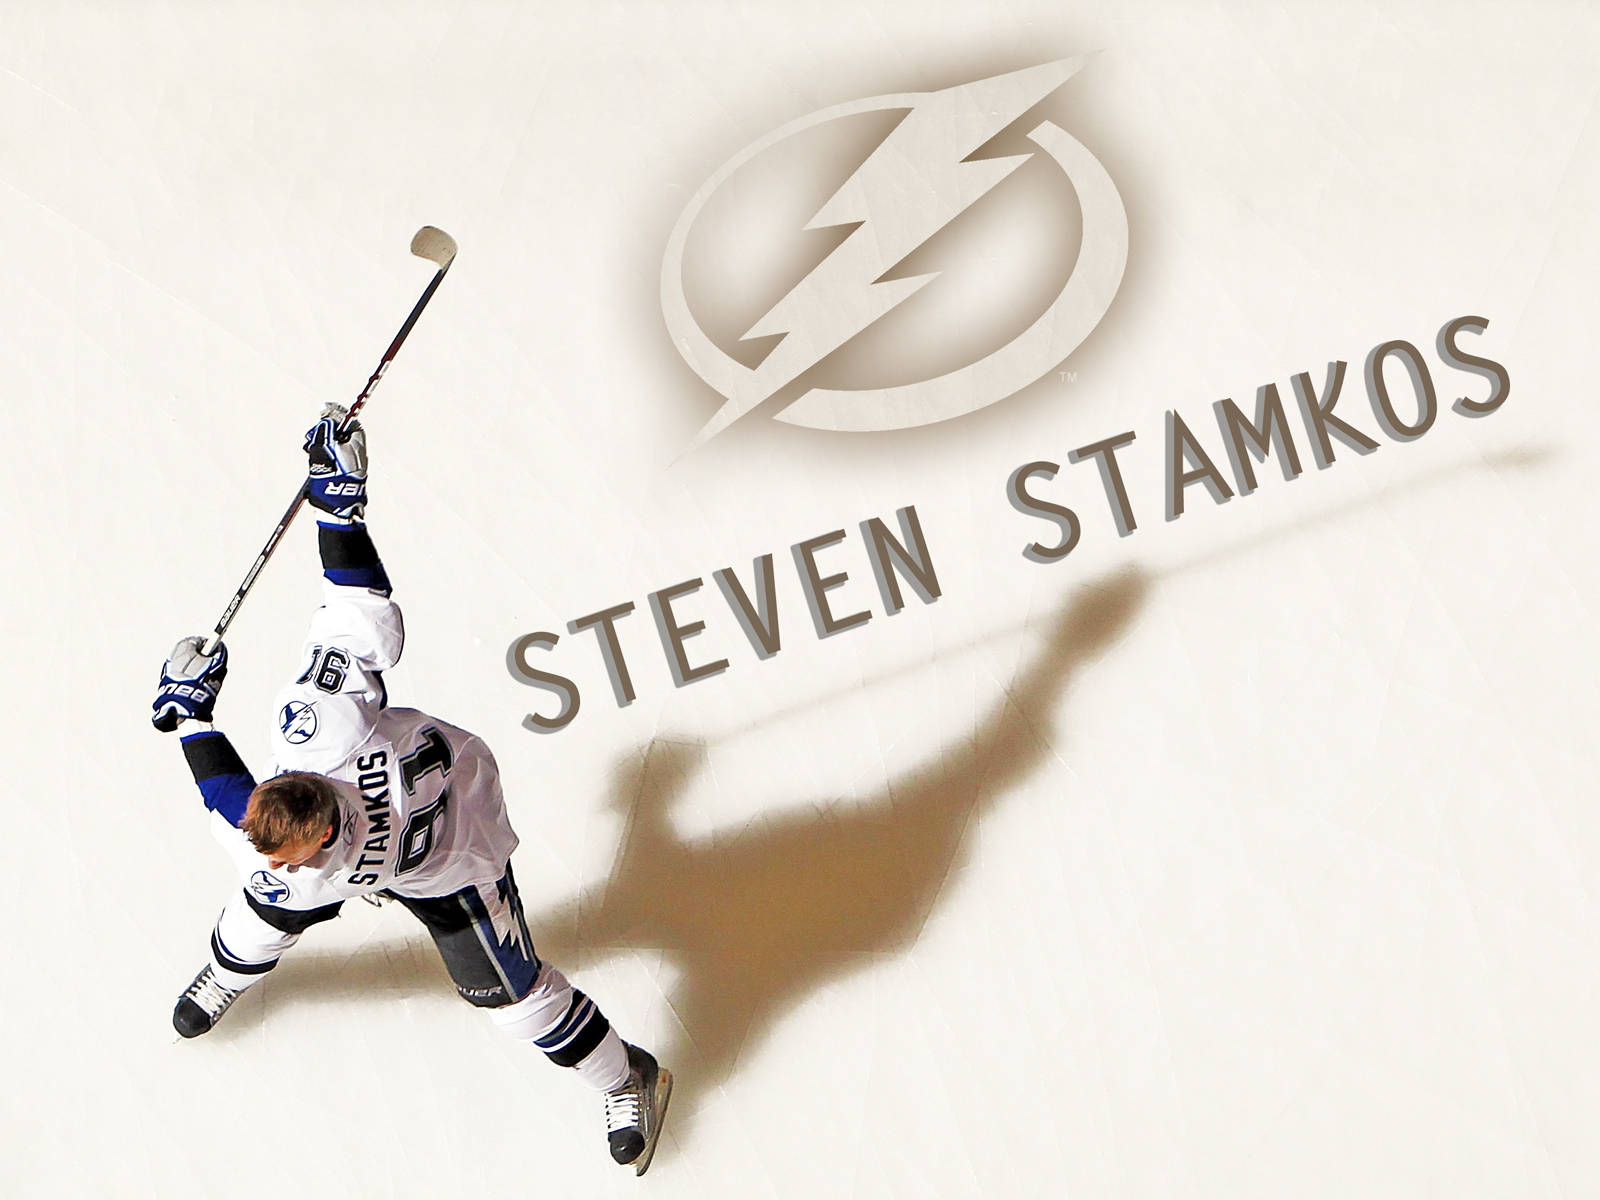 The Tampa Bay Lightning's Star - Steven Stamkos on Ice Wallpaper